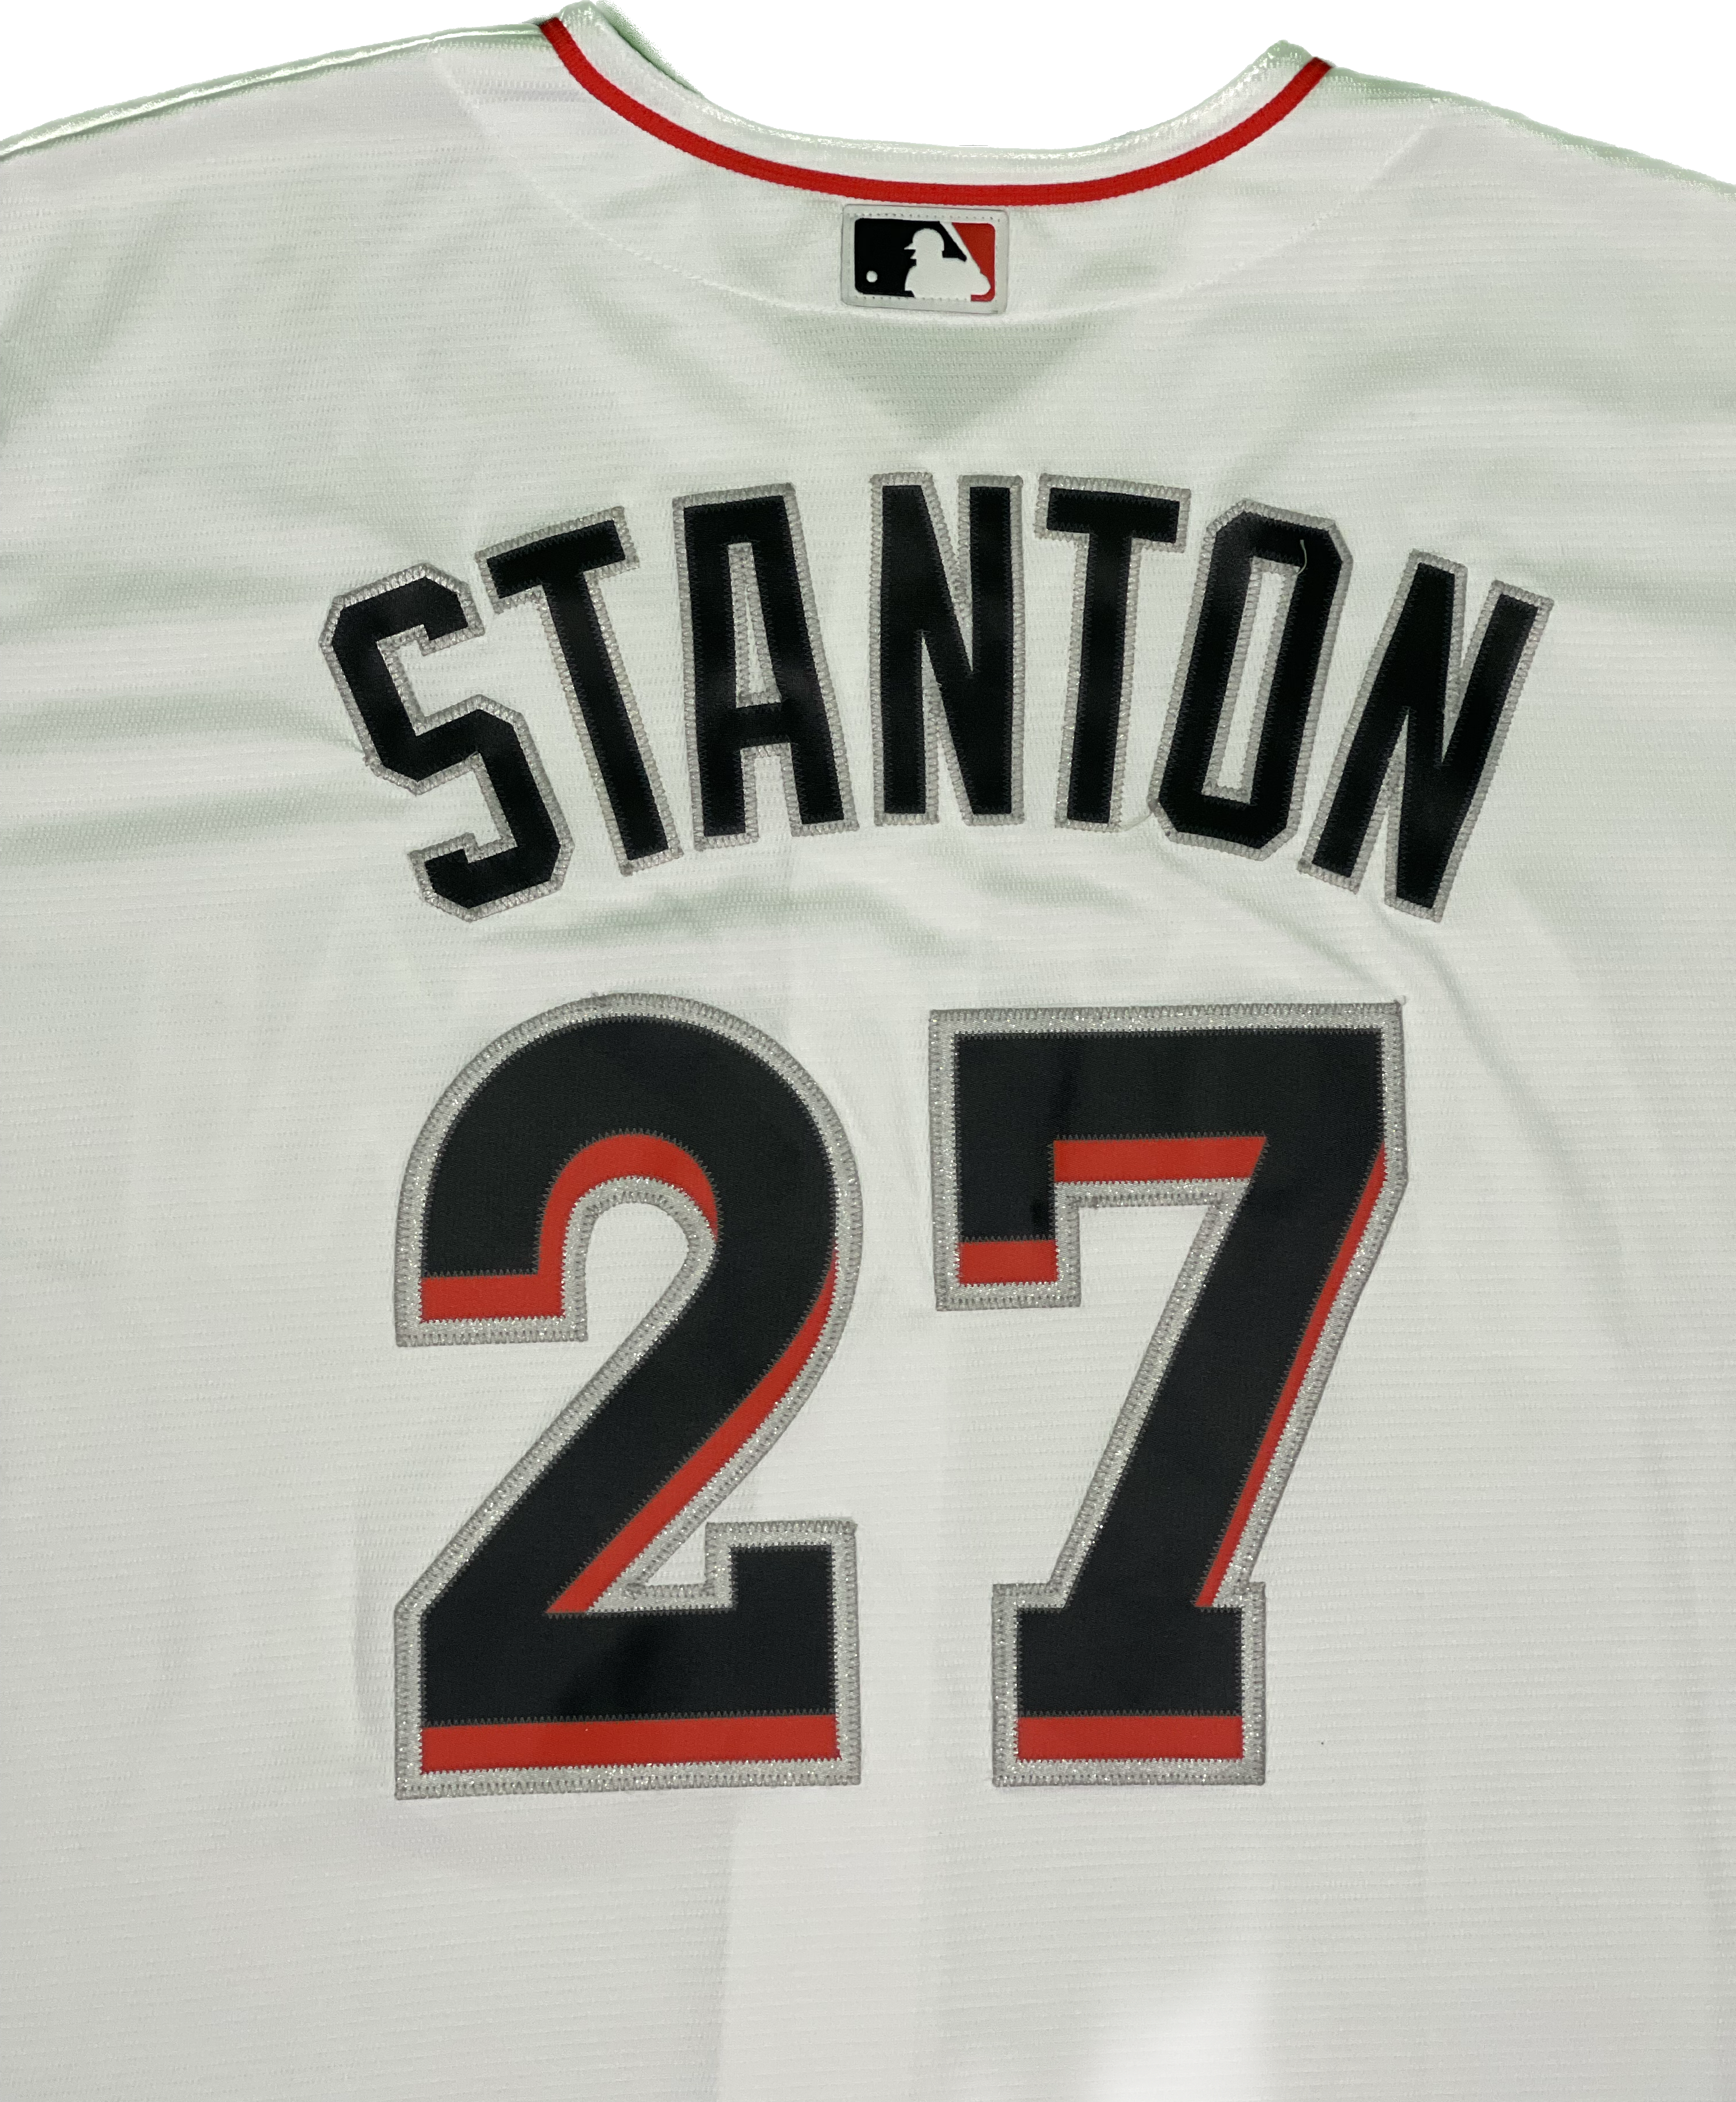 MLB Miami Marlins Stanton Jersey